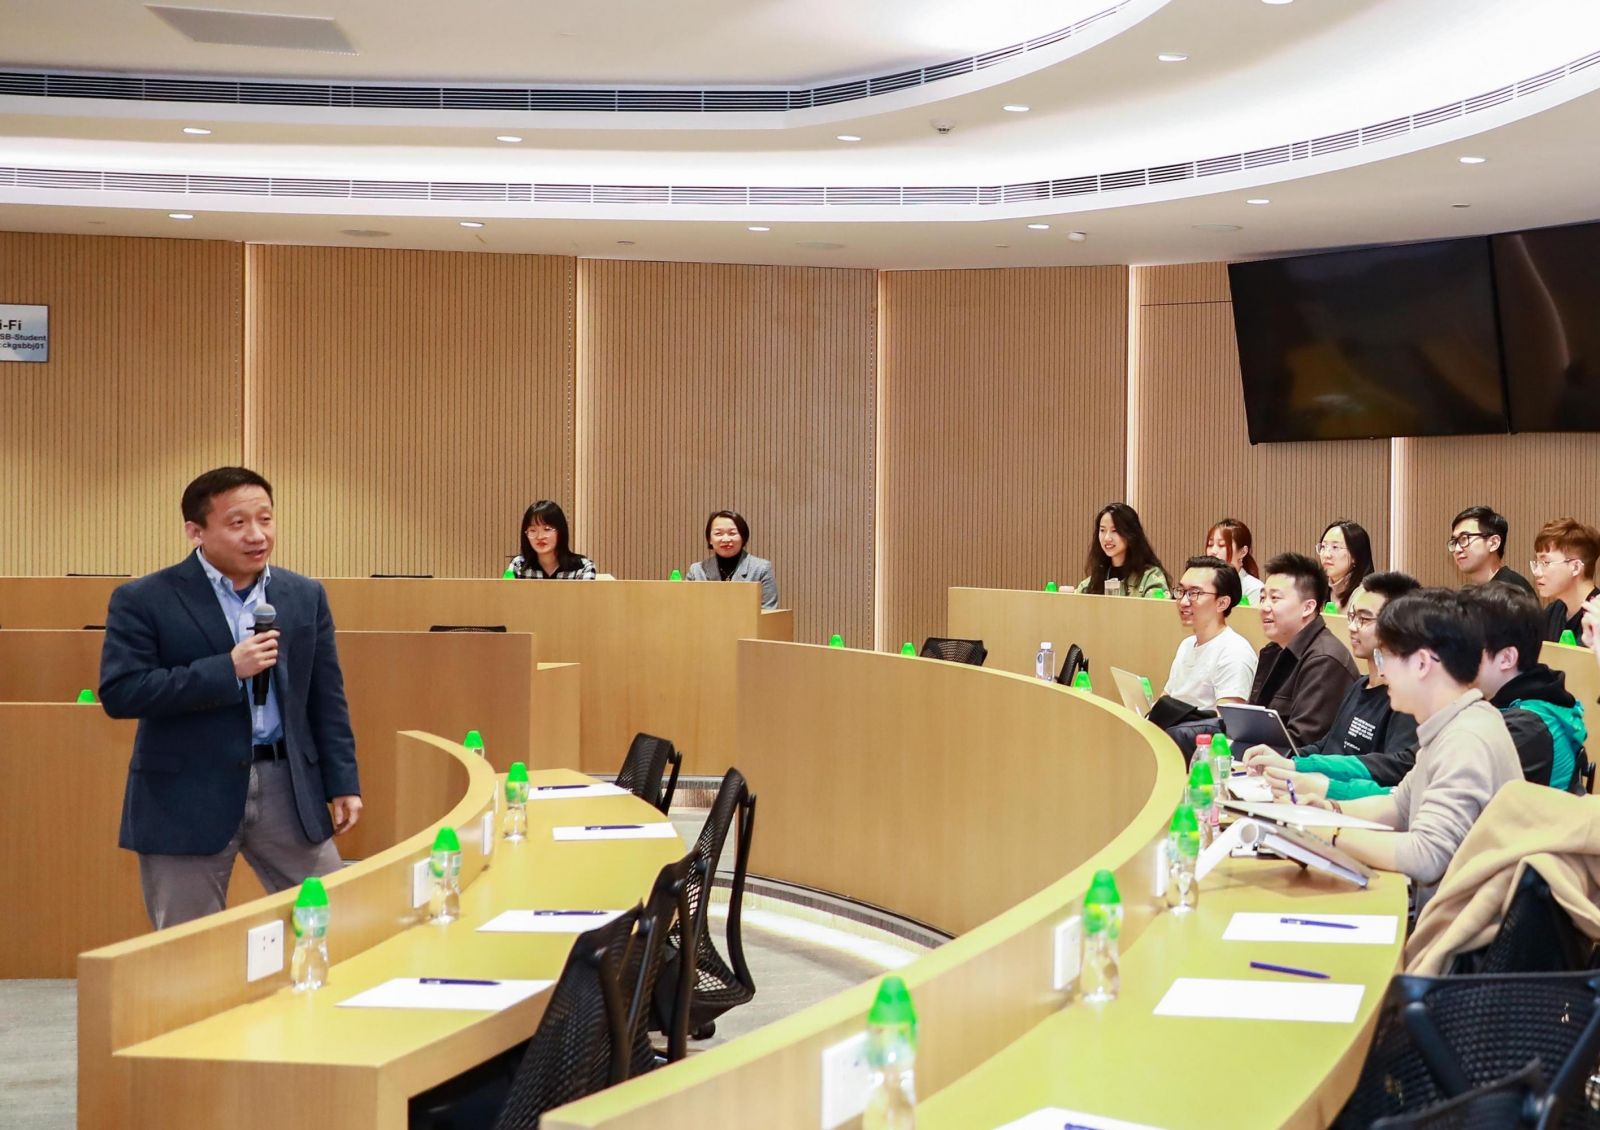 Professor Li Haitao, CKGSB’s Dean’s Distinguished Chair Professor of Finance and Associate Dean for MBA programs, welcomes Johns Hopkins students at CKGSB’s classroom